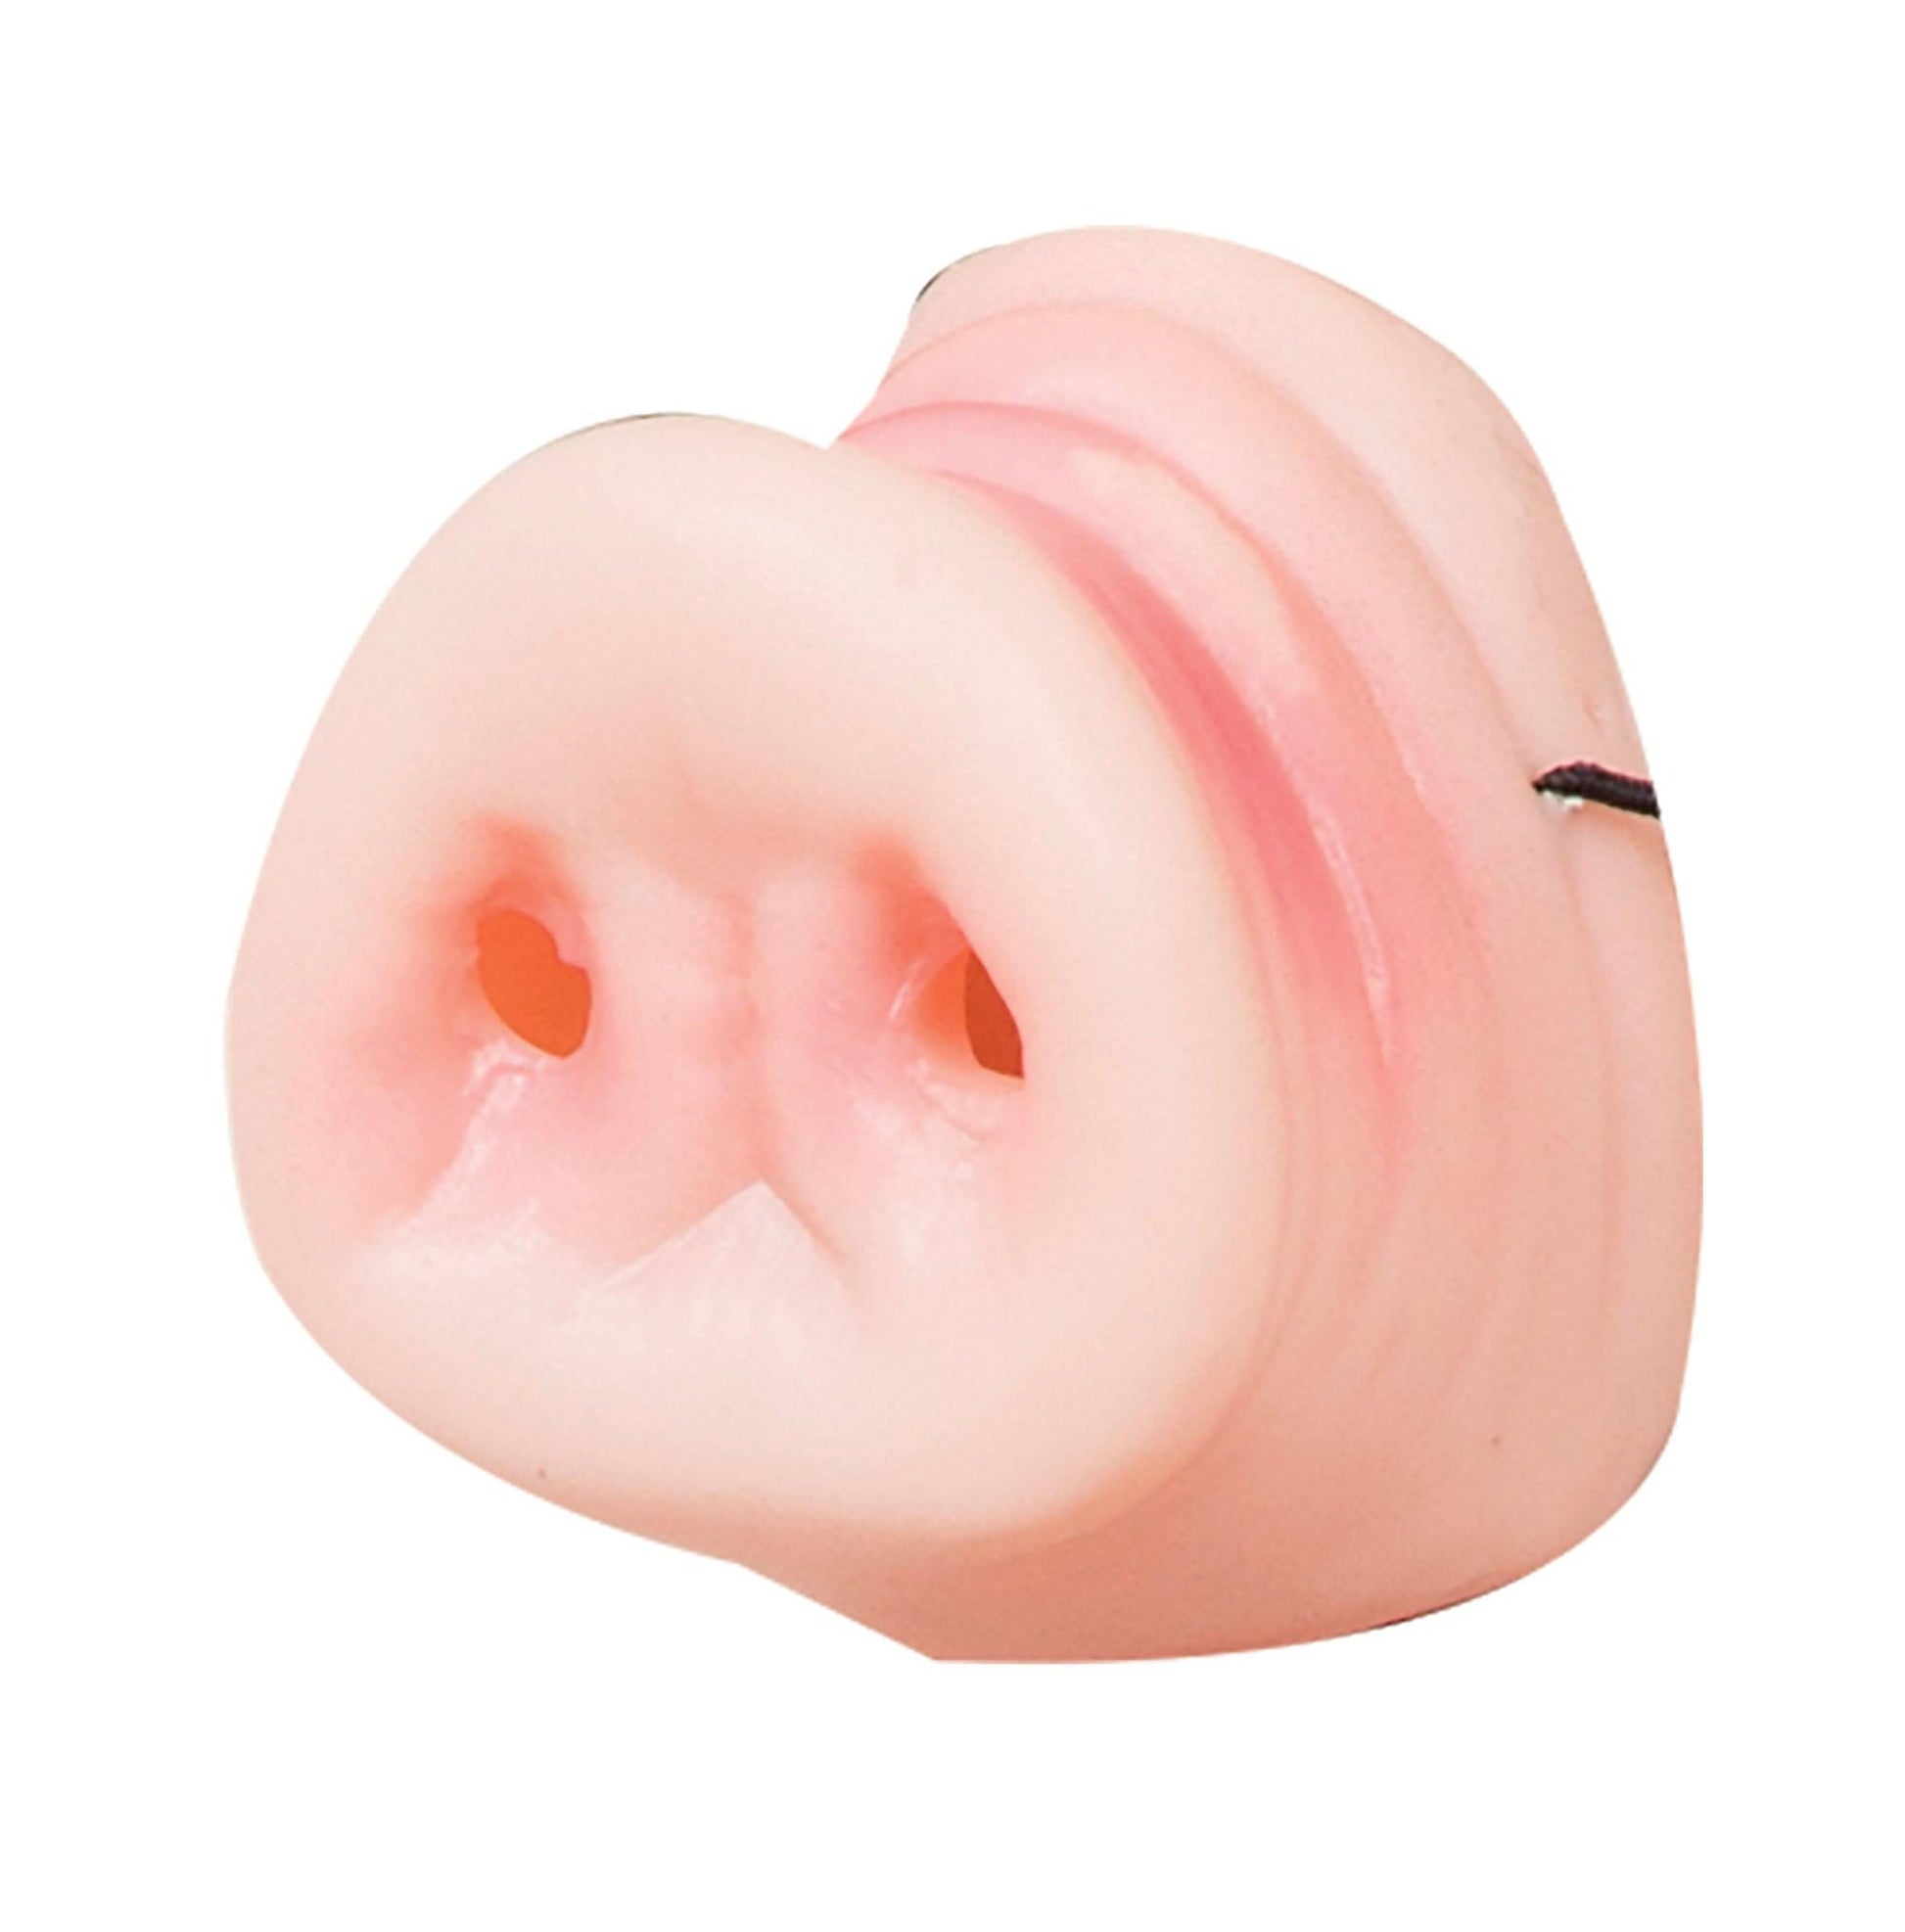 Pig Nose - Labreeze